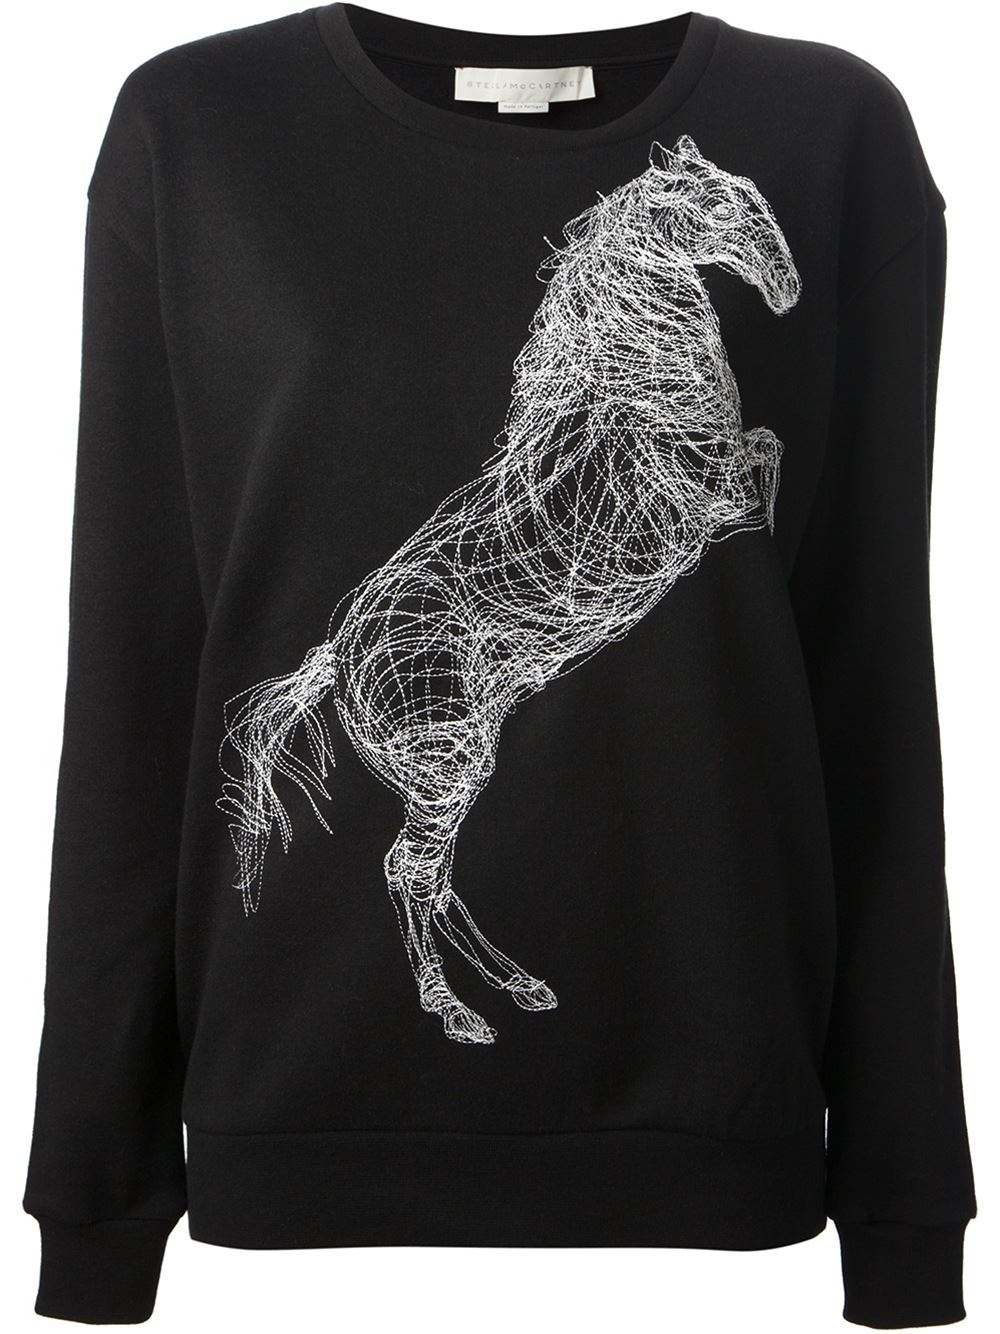 Stella McCartney Horse Sweater in Black - Lyst